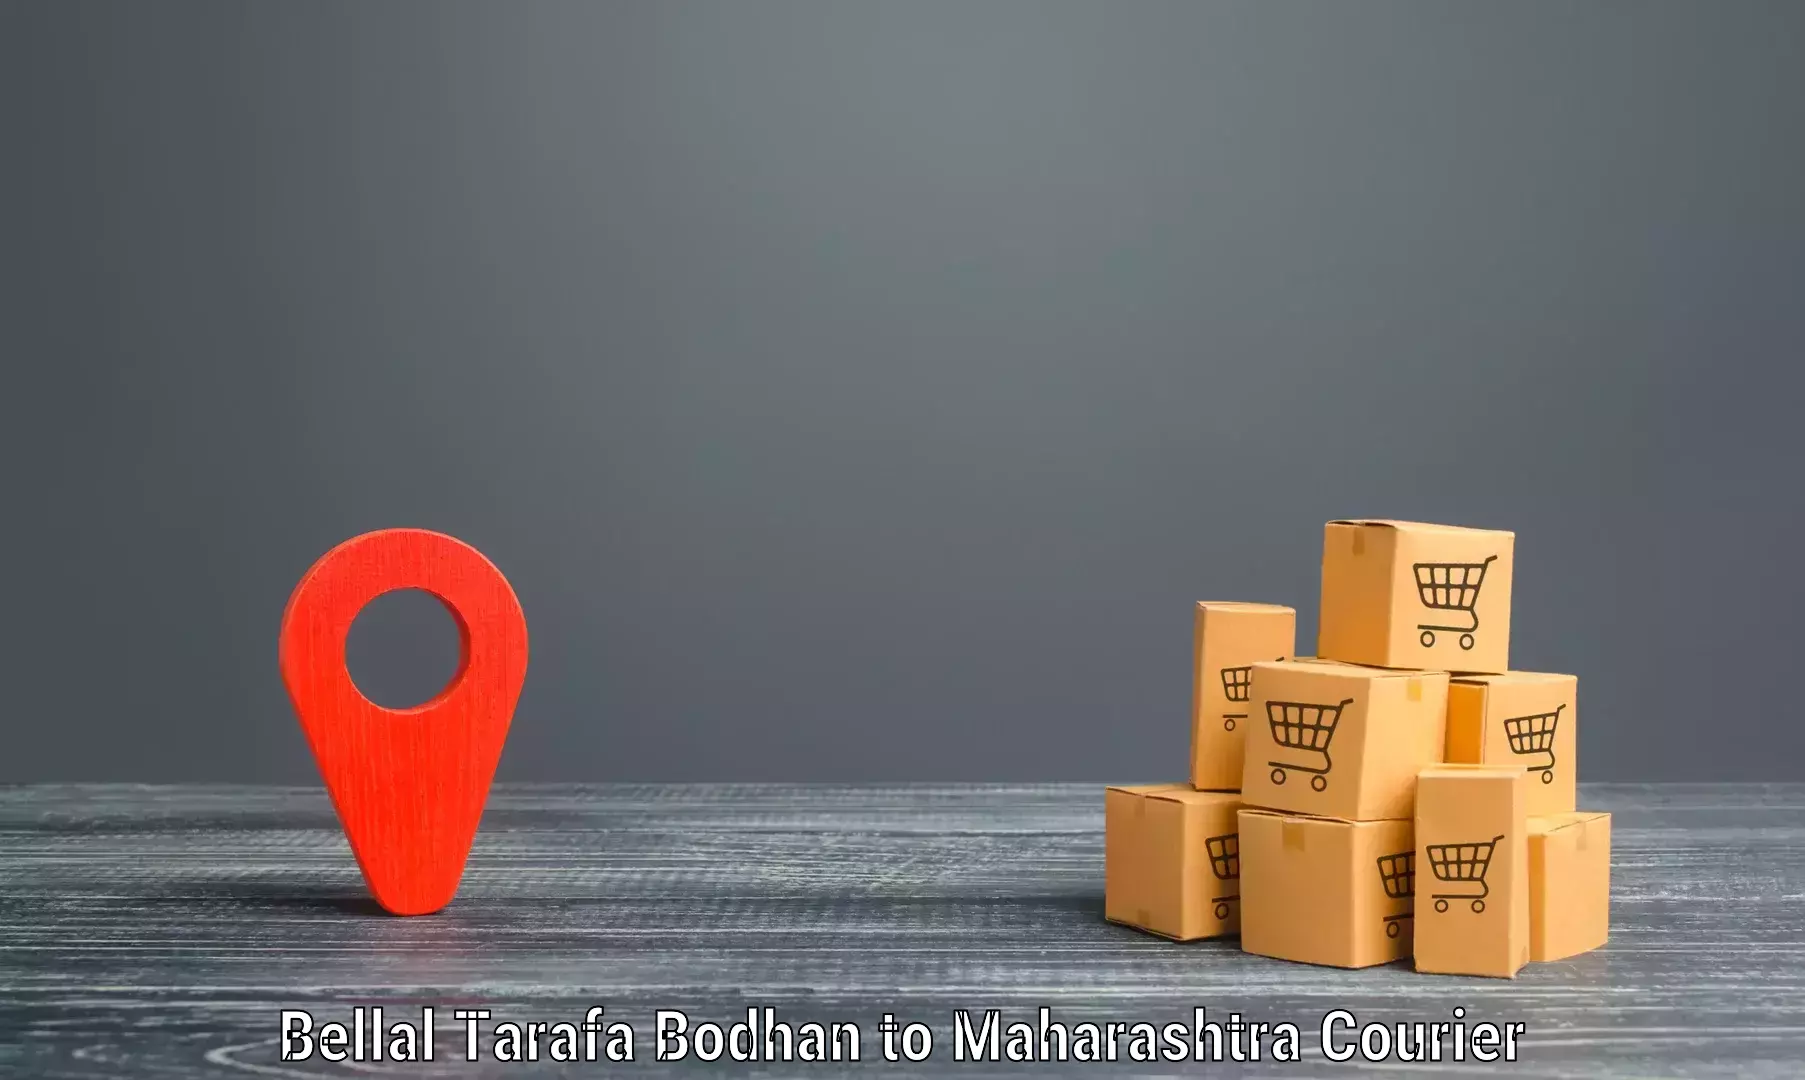 Reliable delivery network Bellal Tarafa Bodhan to Savitribai Phule Pune University